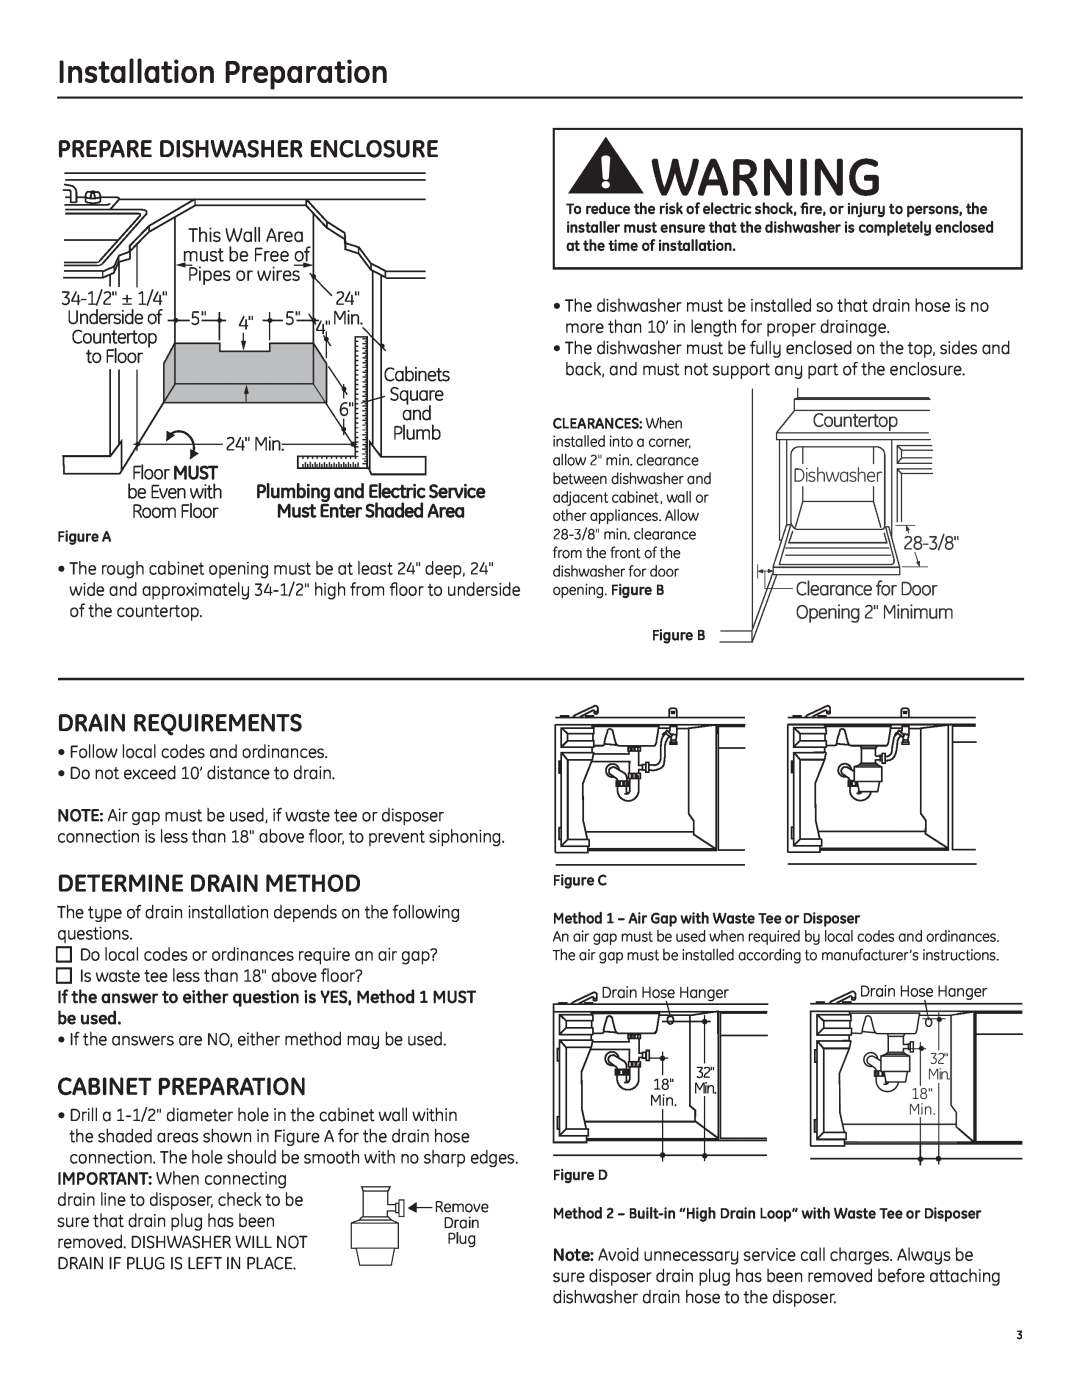 GE GSD6000, PDW7000 manual Prepare Dishwasher Enclosure, Drain Requirements, Determine Drain Method, Cabinet Preparation 